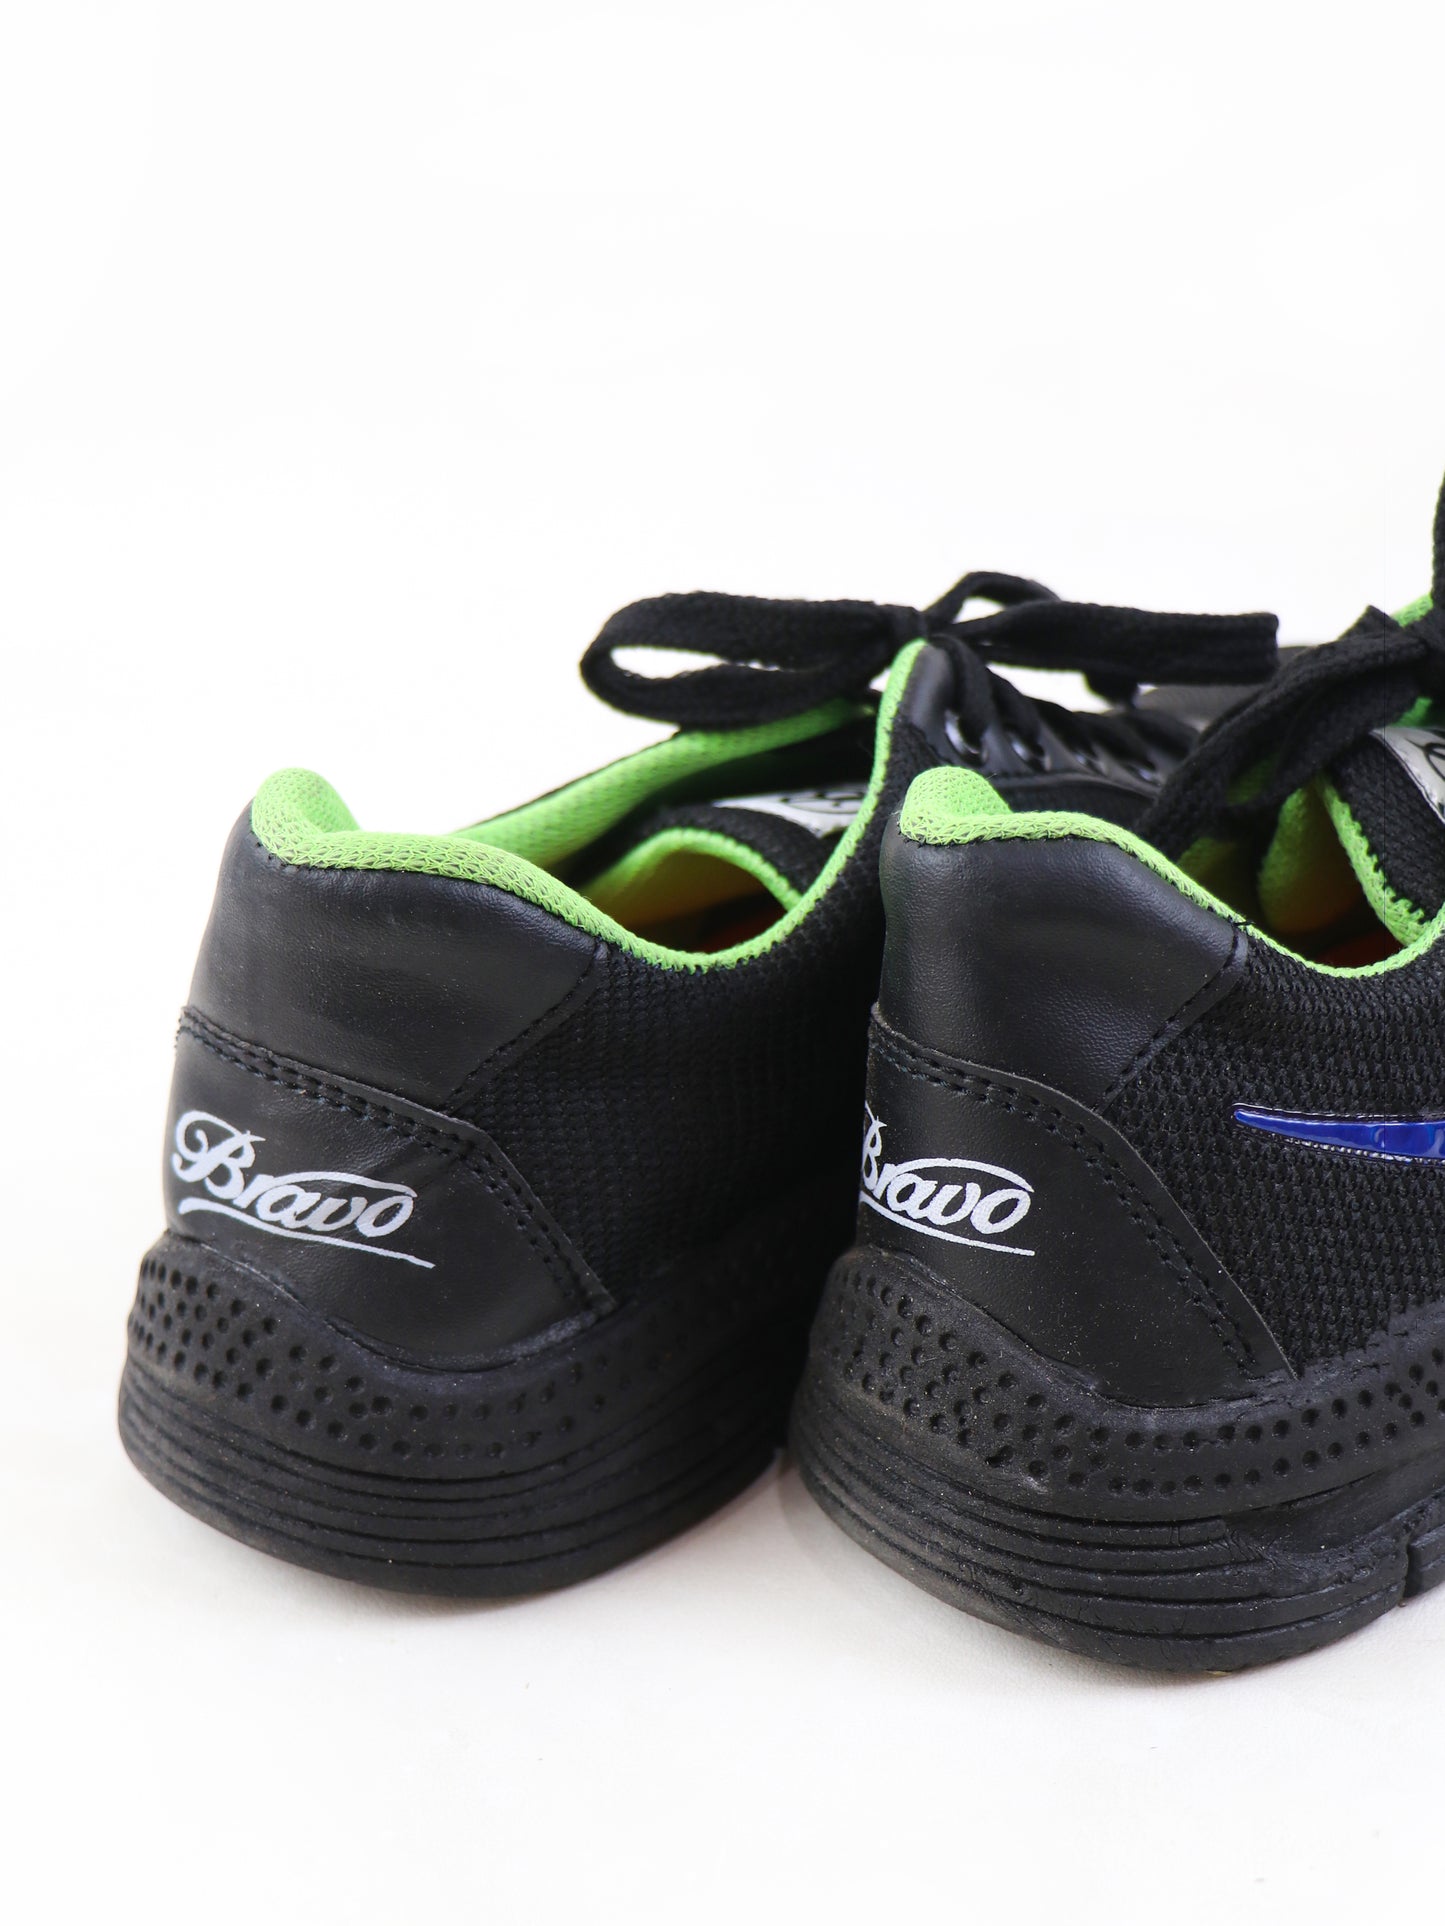 MJS52 Sneakers for Men Black